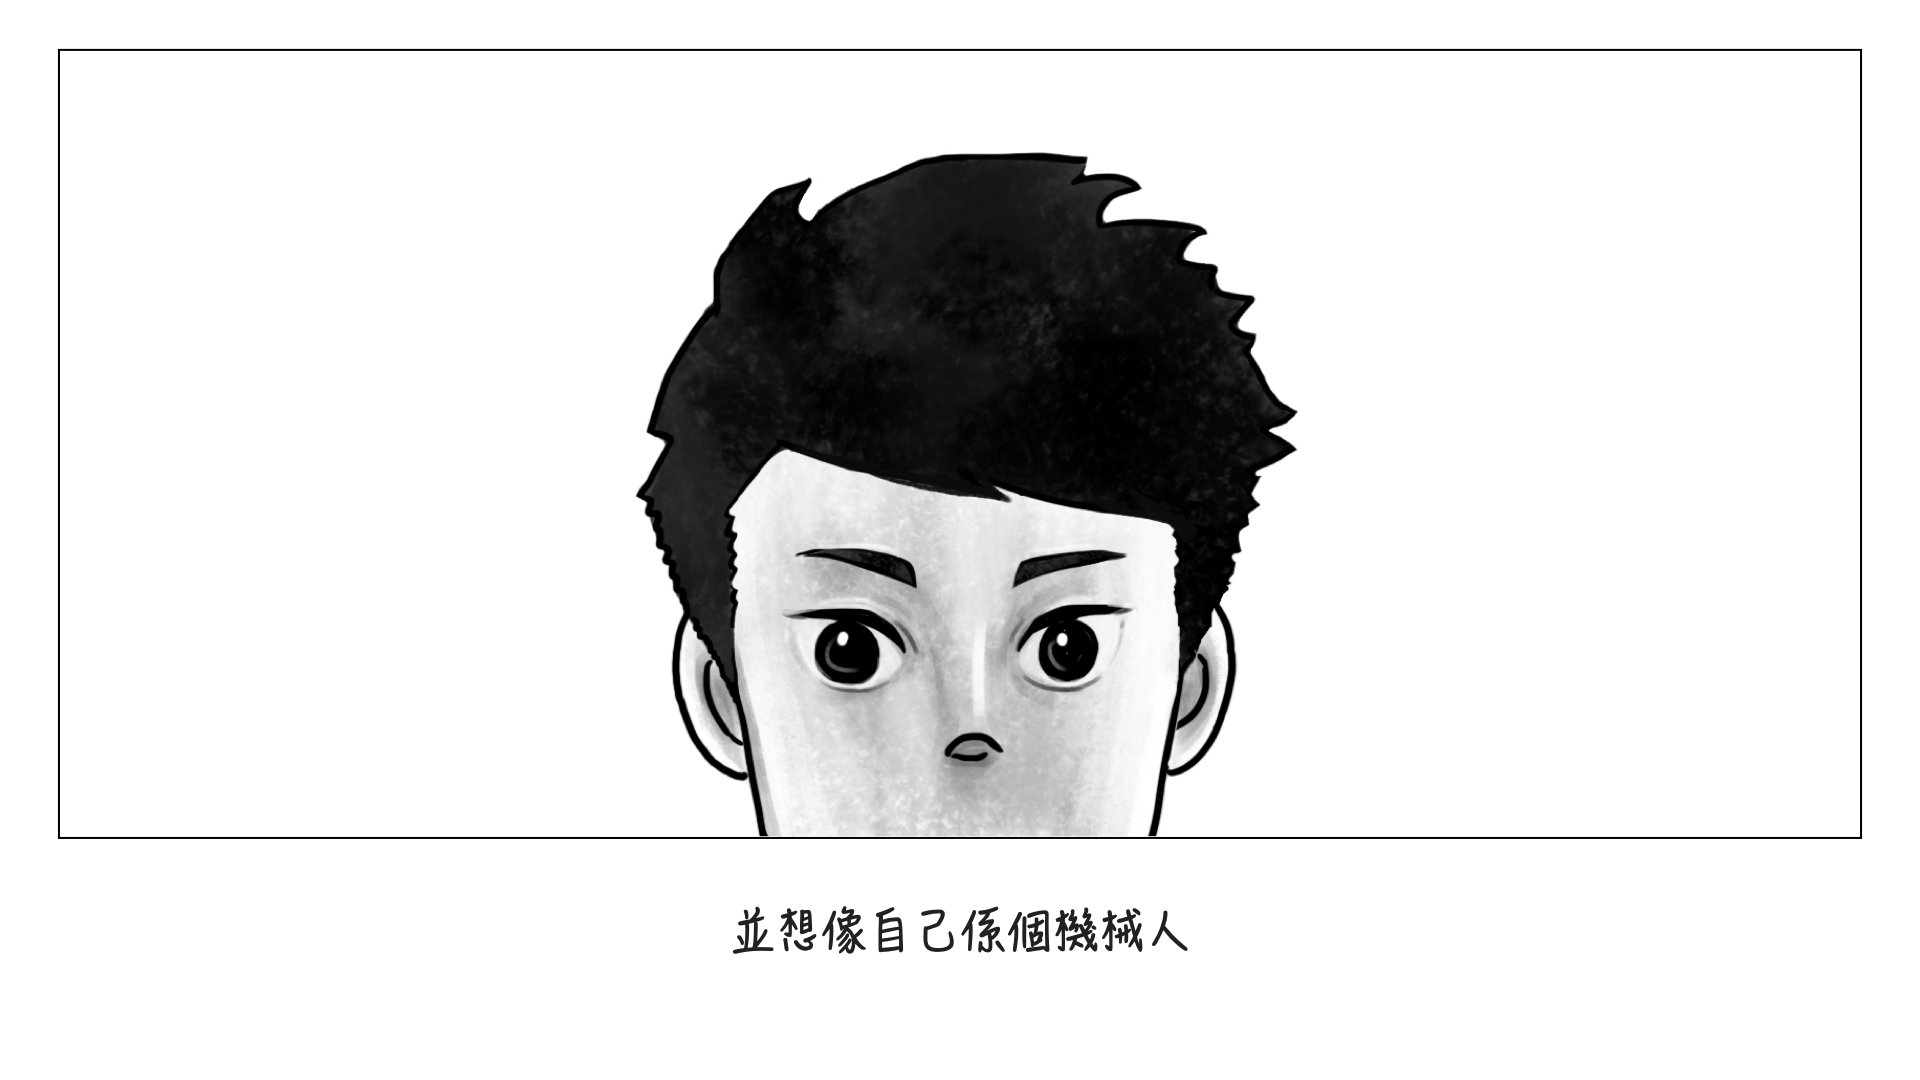 PP_Comic_Chinese_HK.004.jpeg